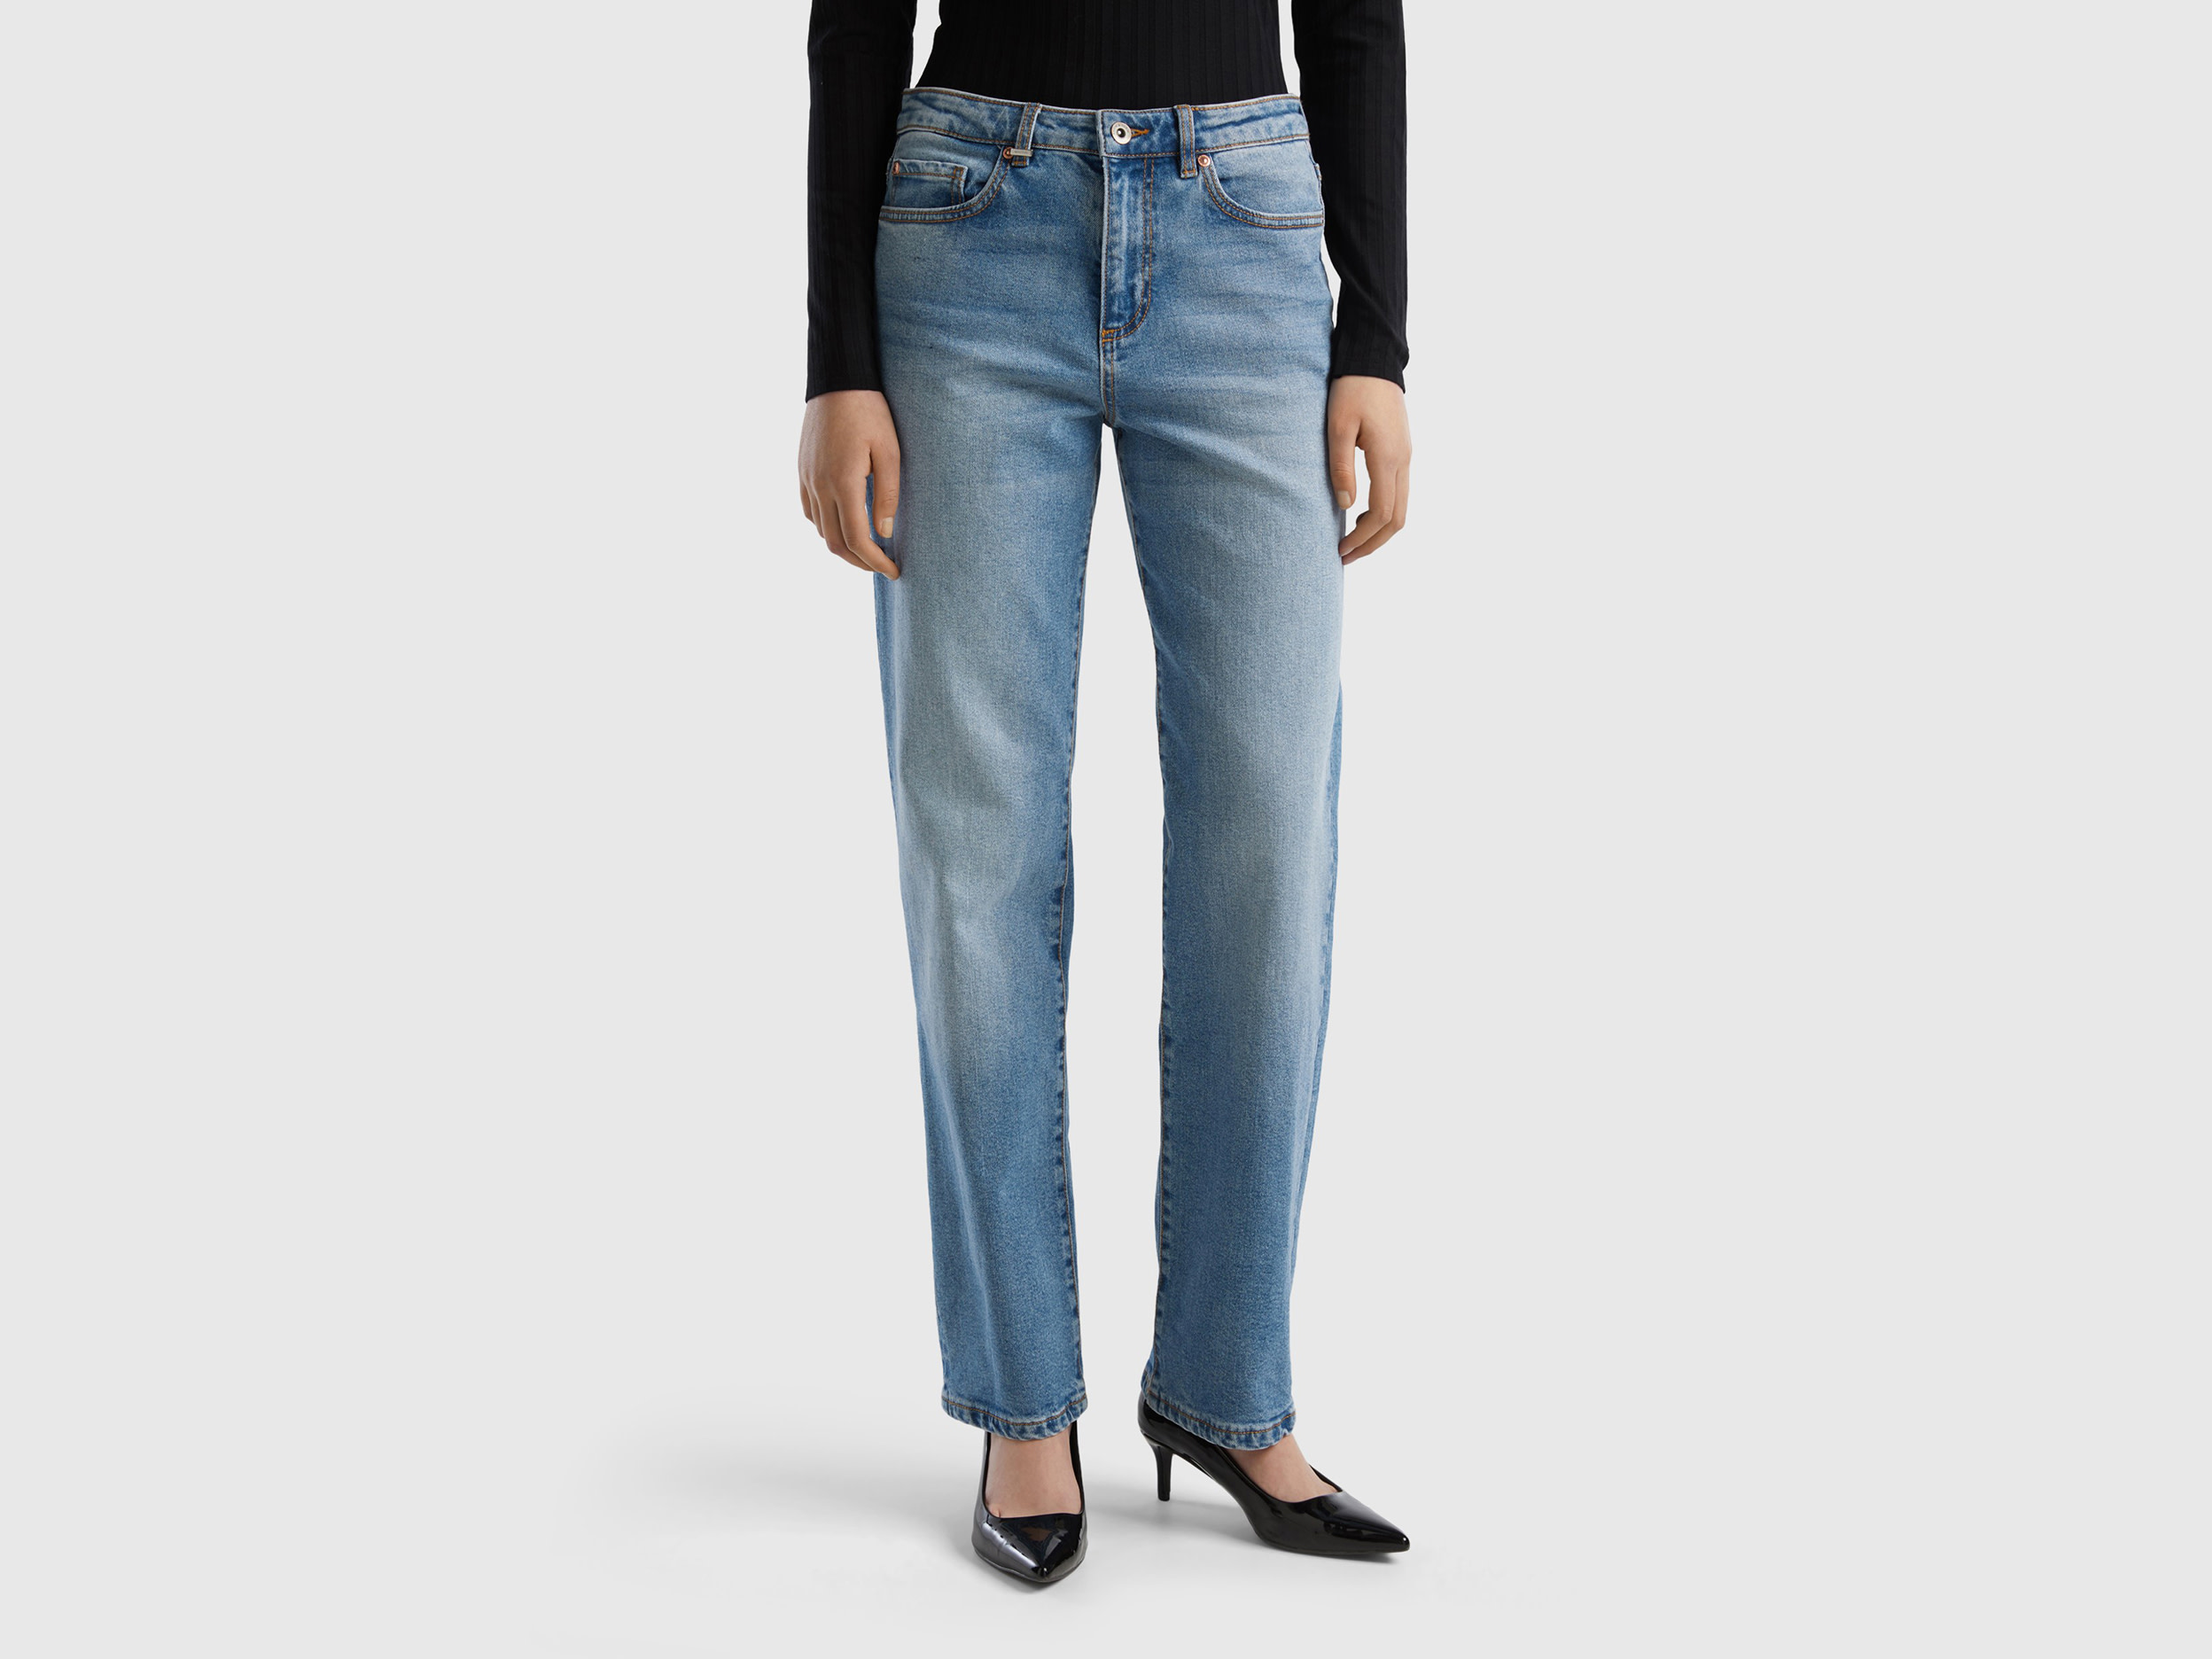 Benetton, Straight Leg Jeans, size 35, Light Blue, Women